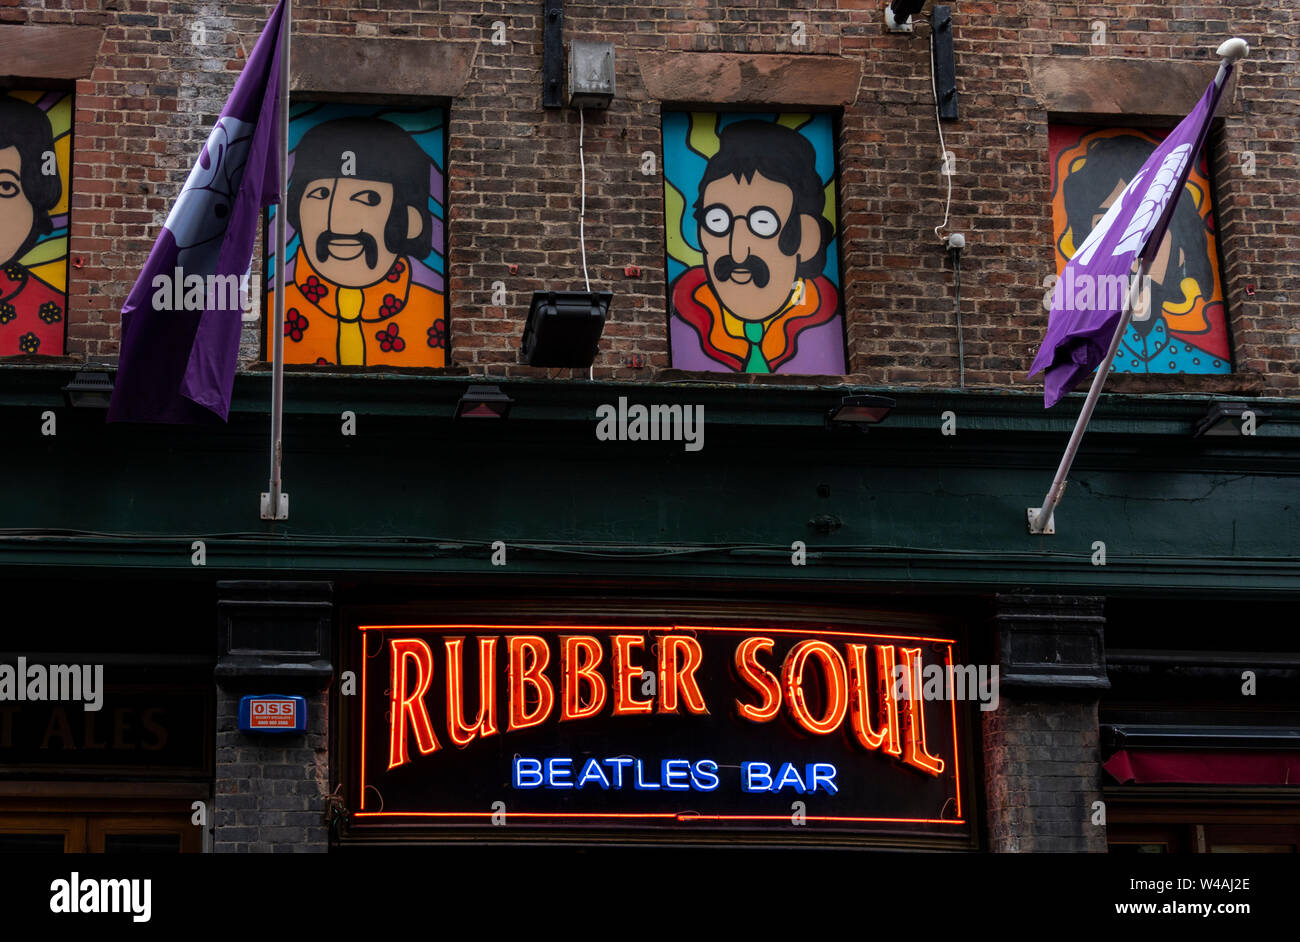 Anima in gomma, uno dei Beatles club a tema su Mathew Street di Liverpool, in Inghilterra Foto Stock